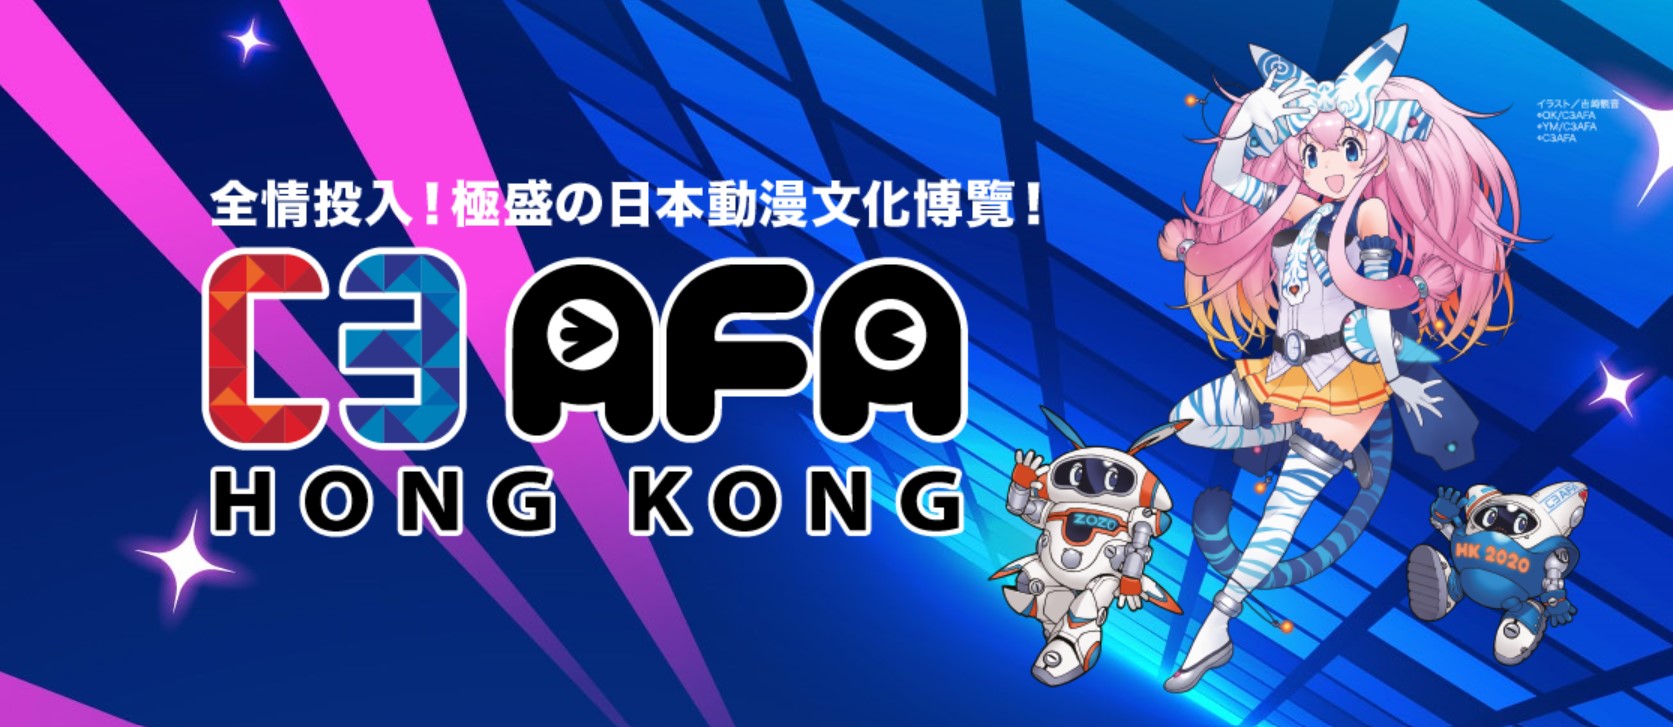 C3AFA HK Cosplay 大激鬥 Online ！奪冠可代表香港參加日本 WCS 網上比賽【電玩資訊】